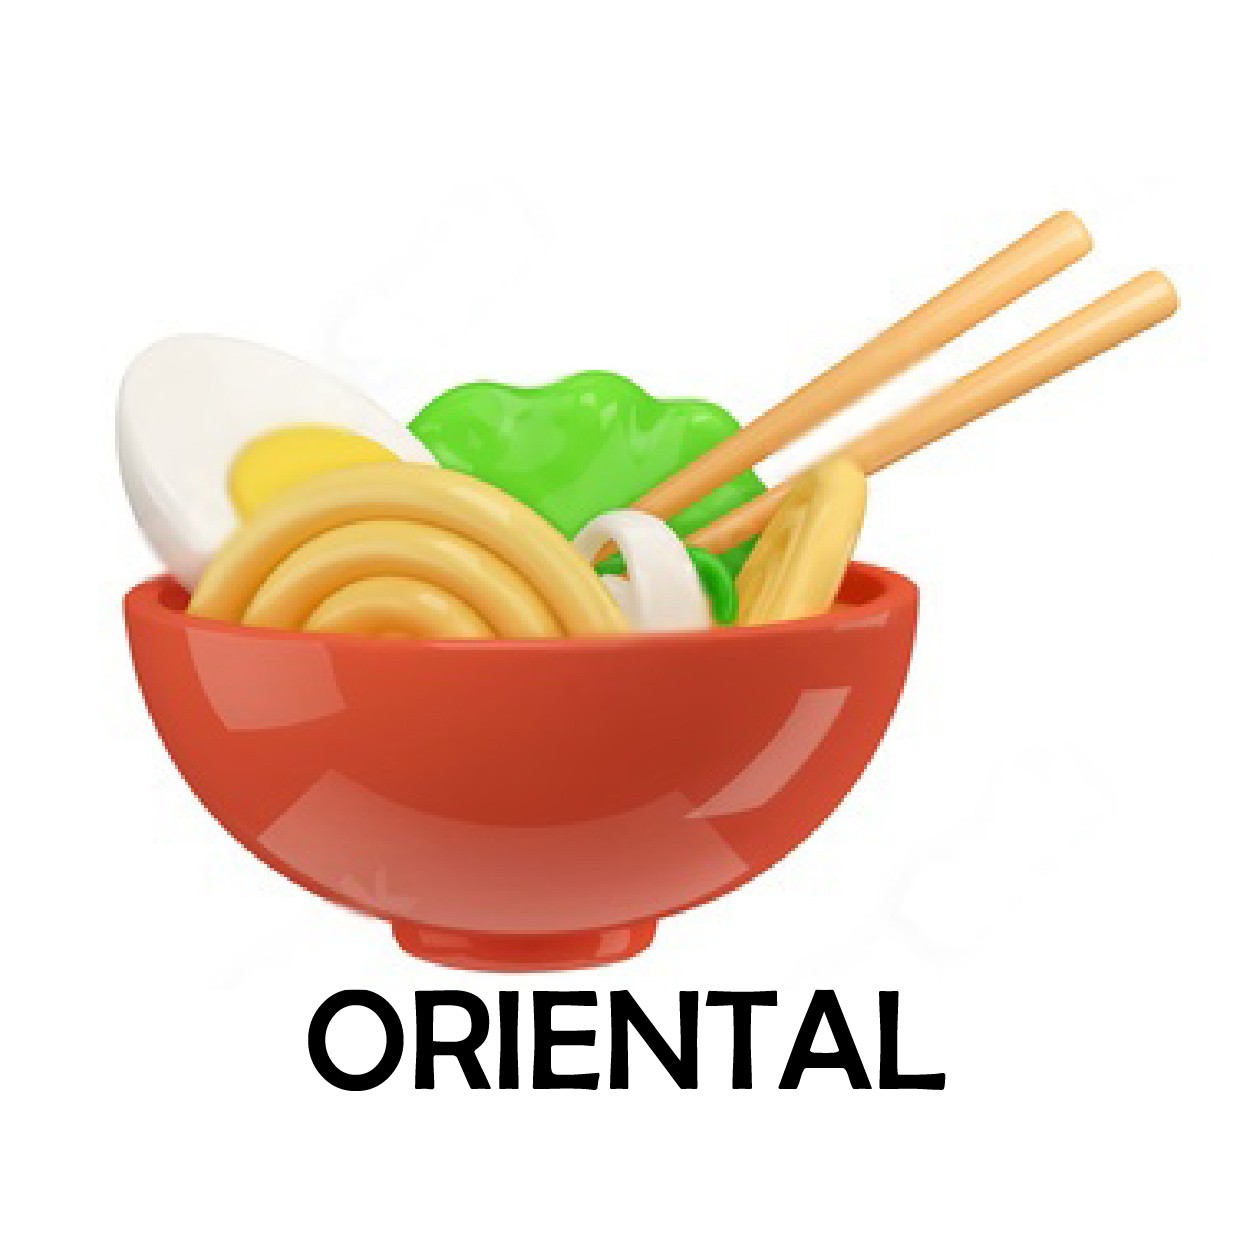 Orientral